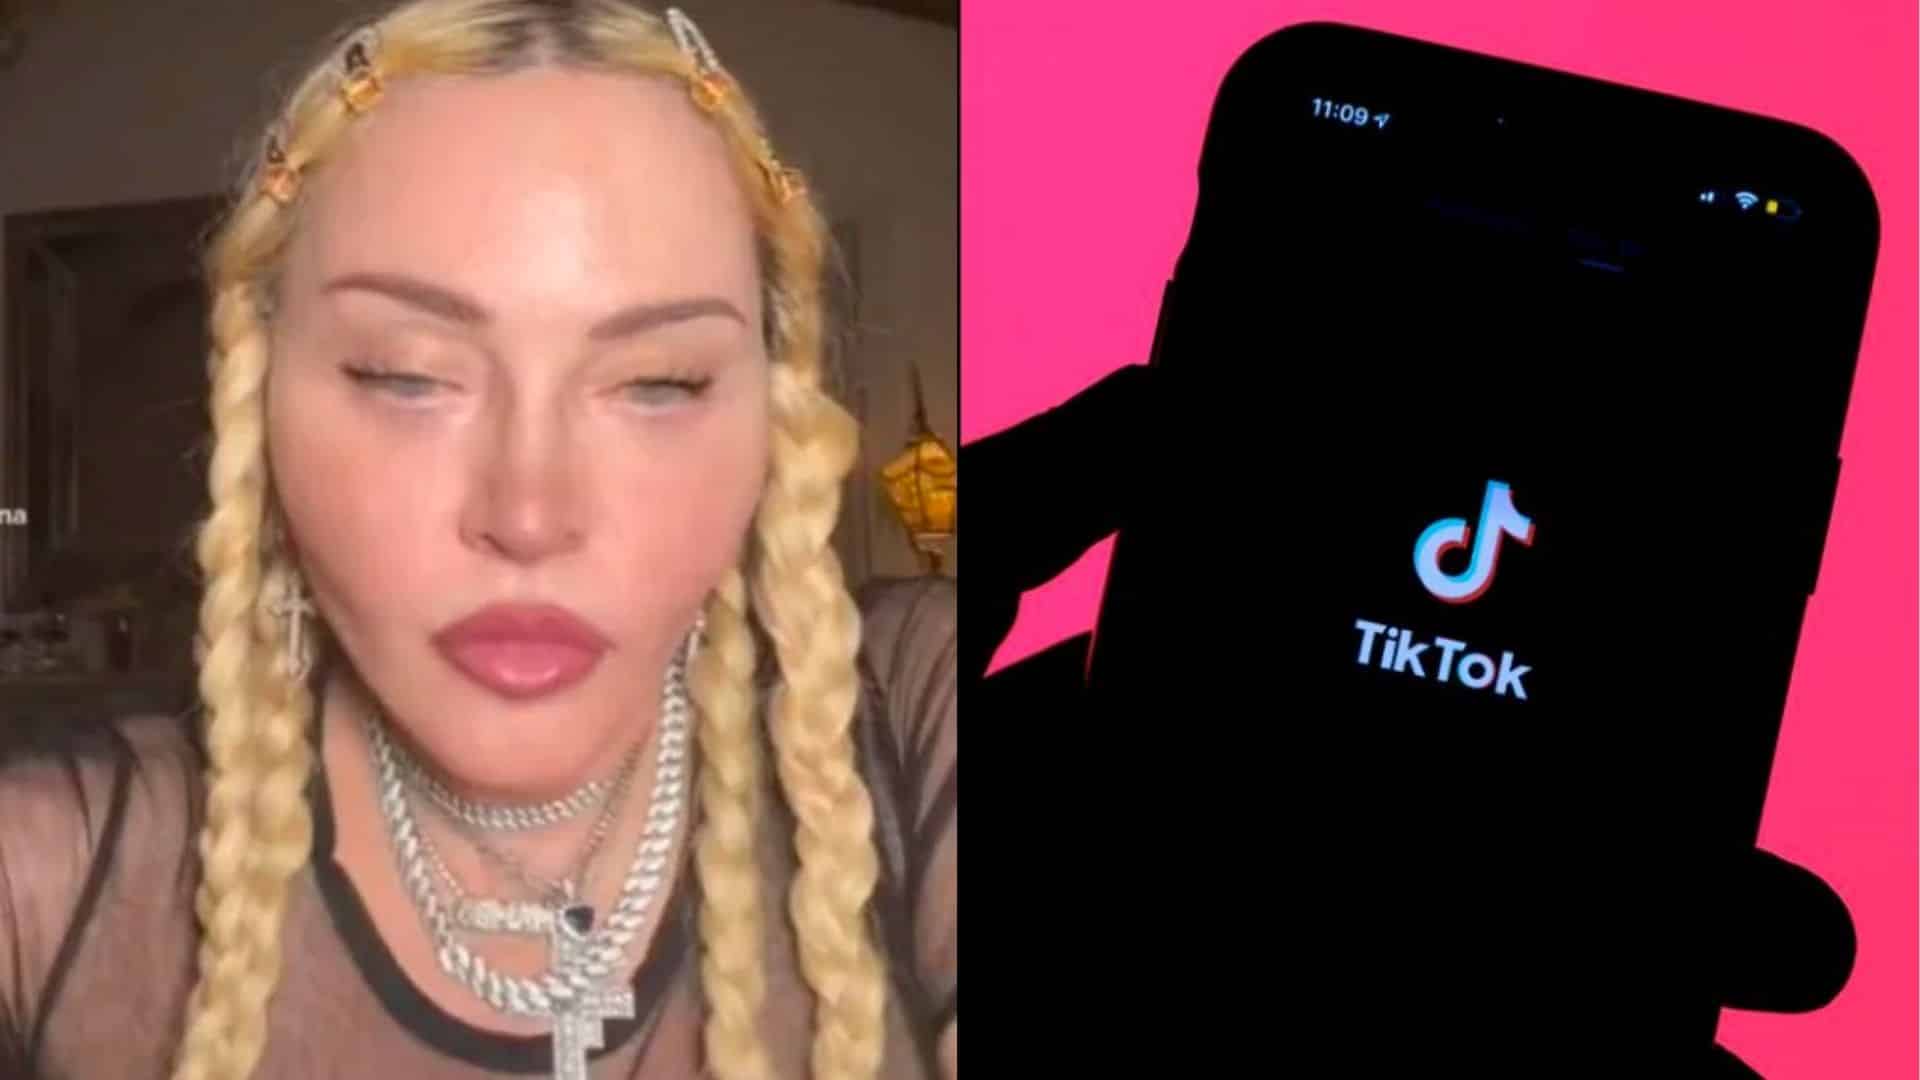 Madonna making TikTok video alongside TikTok logo